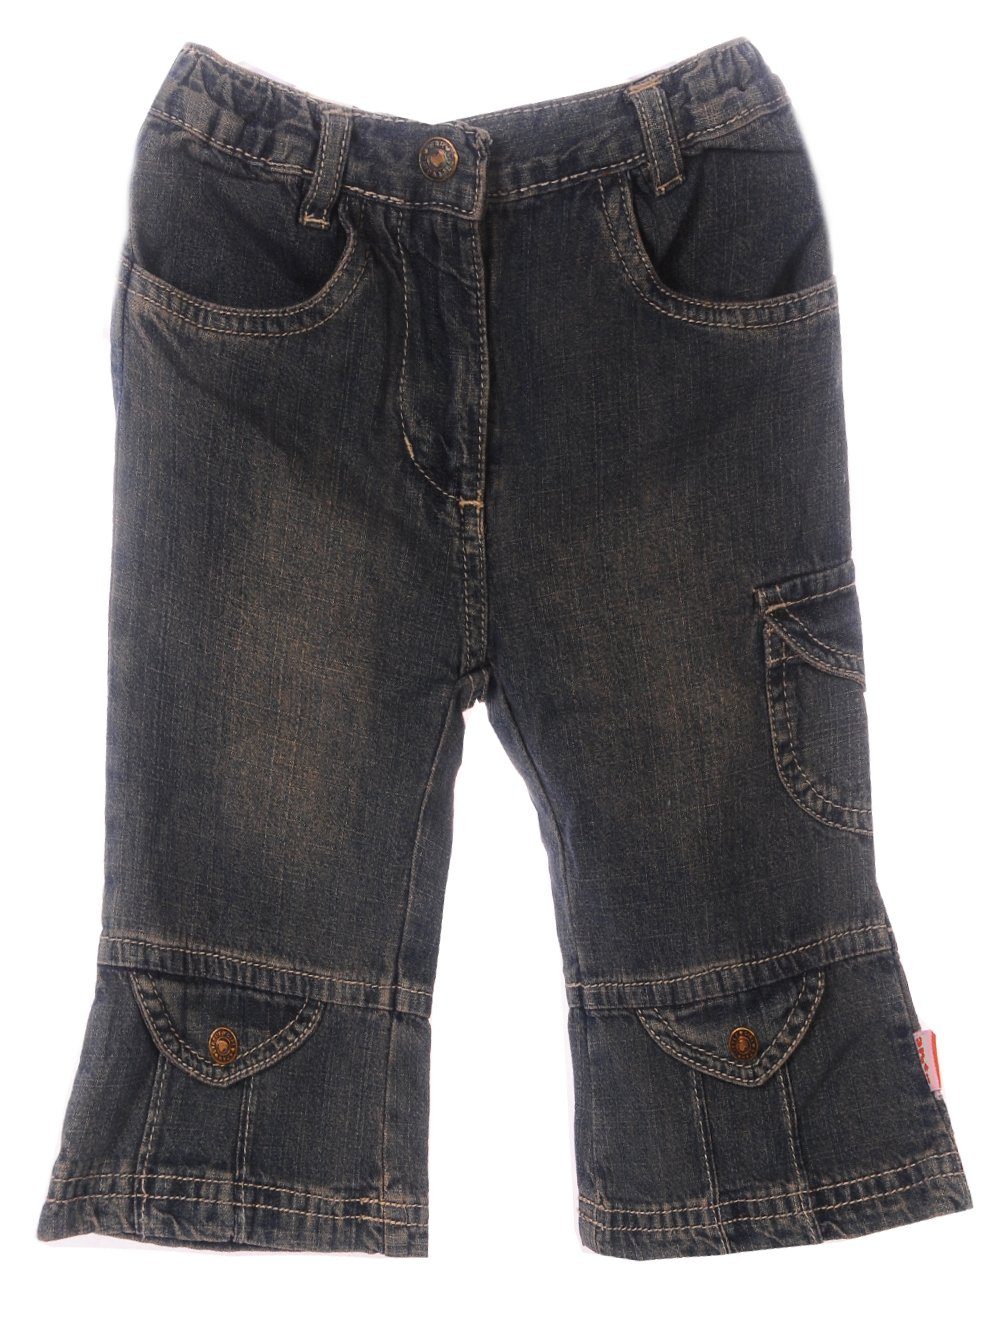 Mode liefern Hose & Shorts 86 74 leichte Baby 86 Hose Jeans Jeanshose 80